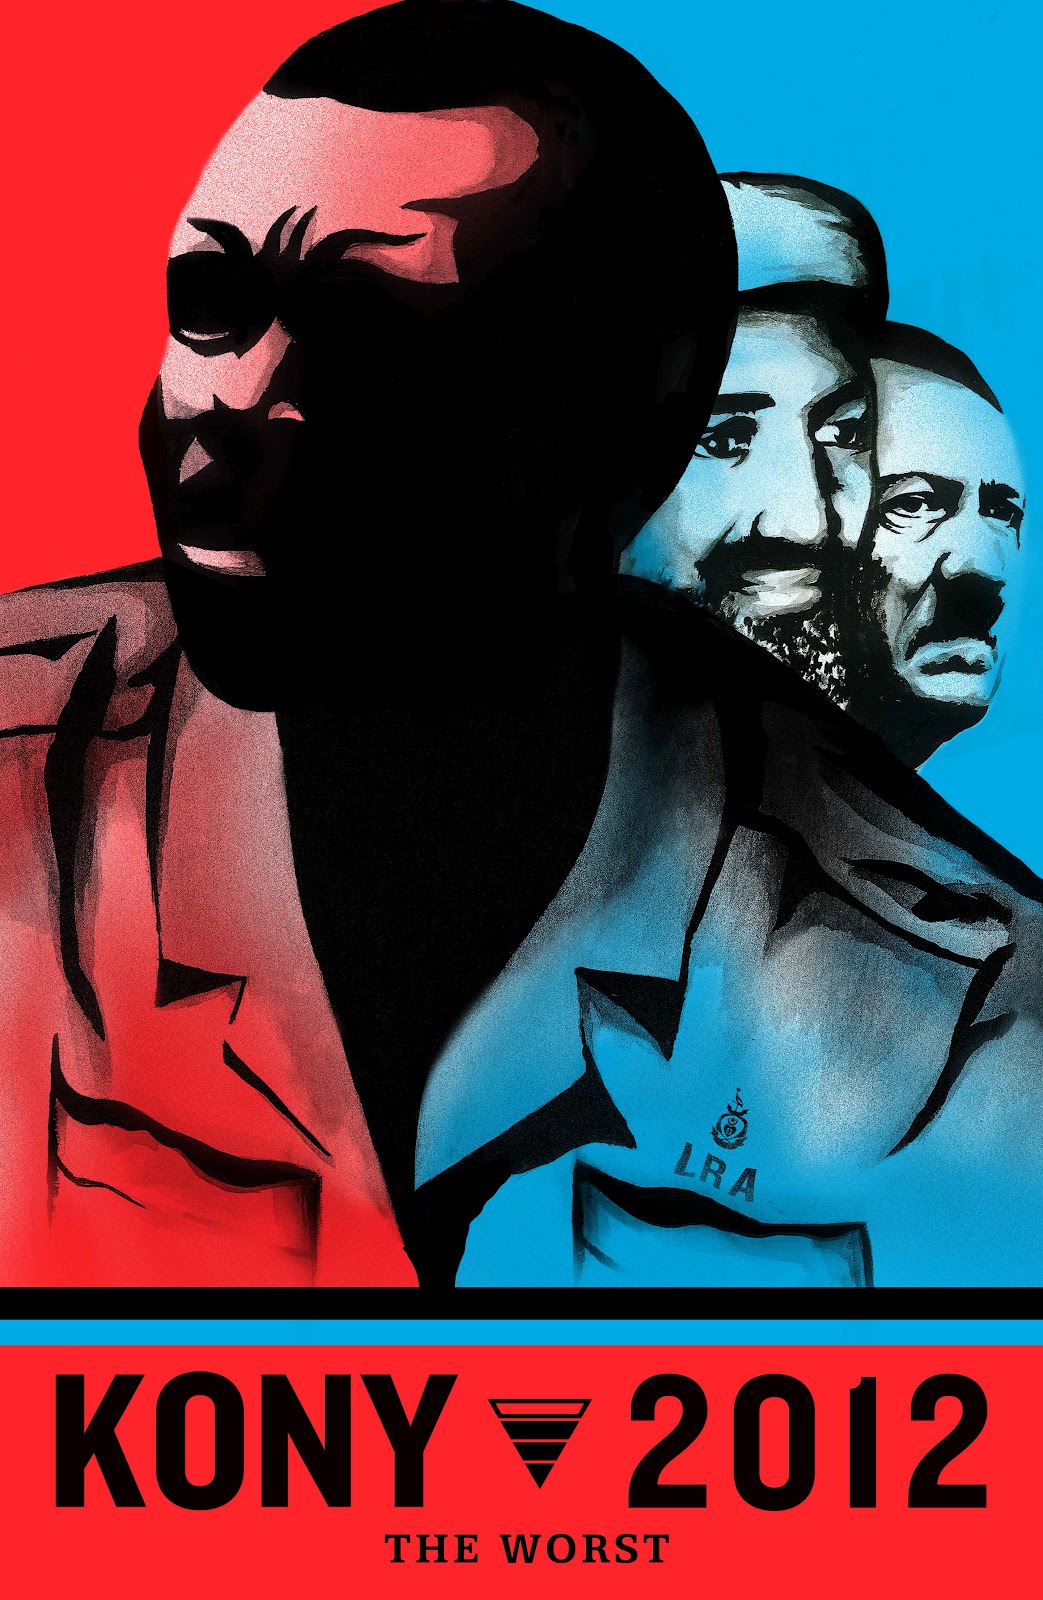 https://blogger.googleusercontent.com/img/b/R29vZ2xl/AVvXsEiV4OqS4dlFGLr5rAb7pGdqD7zNKJ2UcUPJ5AKsHA8S3HQAUql2GoNlU9Ia9e5Mw0z6NyvQ0rs3uRr6VueDmYmES9Qu9uSVzYrncOnGE7lAJdSndUkjQwzhtcZomFuL3CgefZi3WUeoAhzC/s1600/Kony_poster.jpg